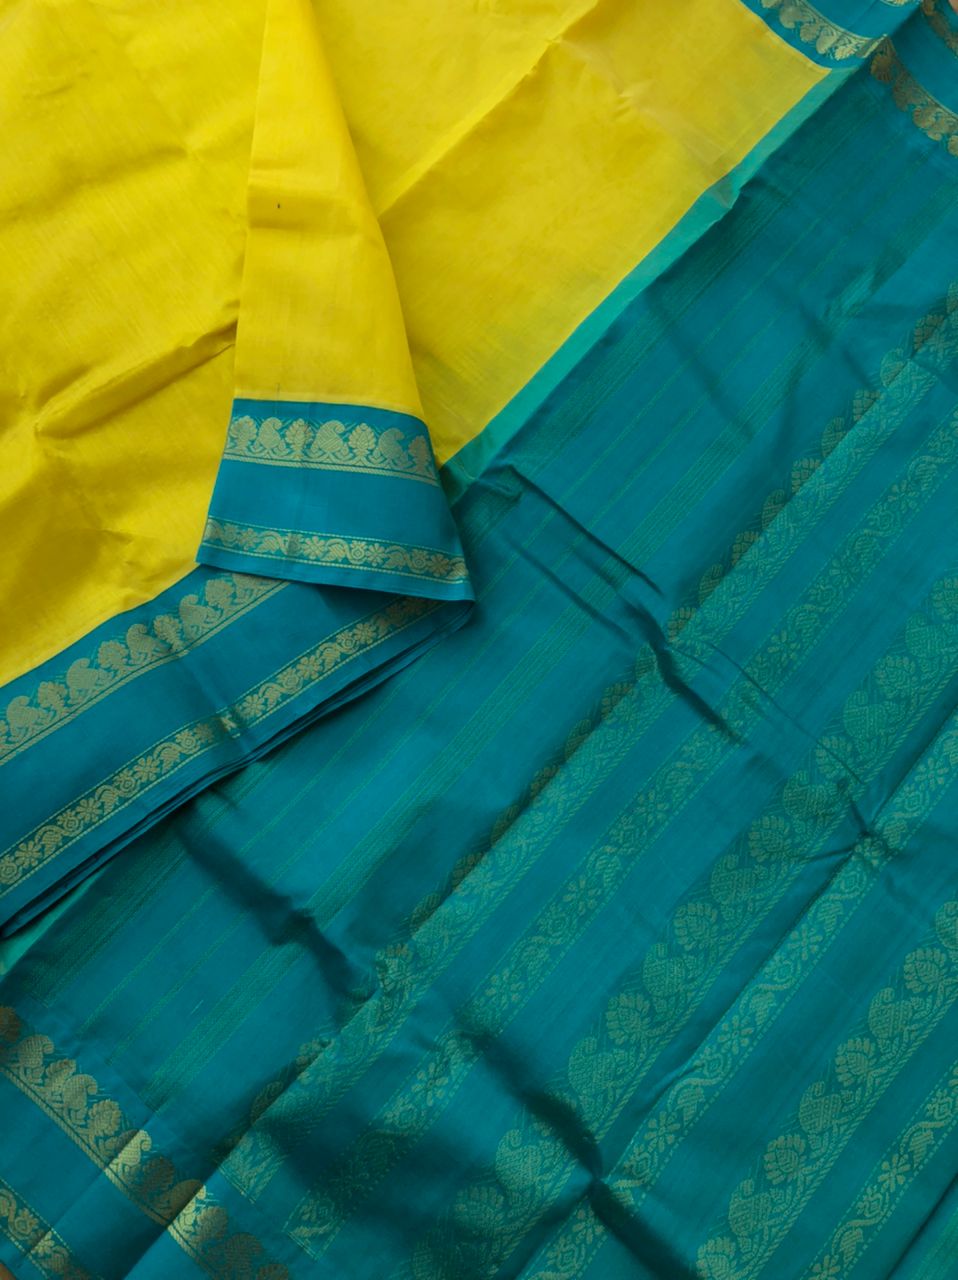 Korvai Silk Cottons - beautiful Sampanga yellow and rama blue